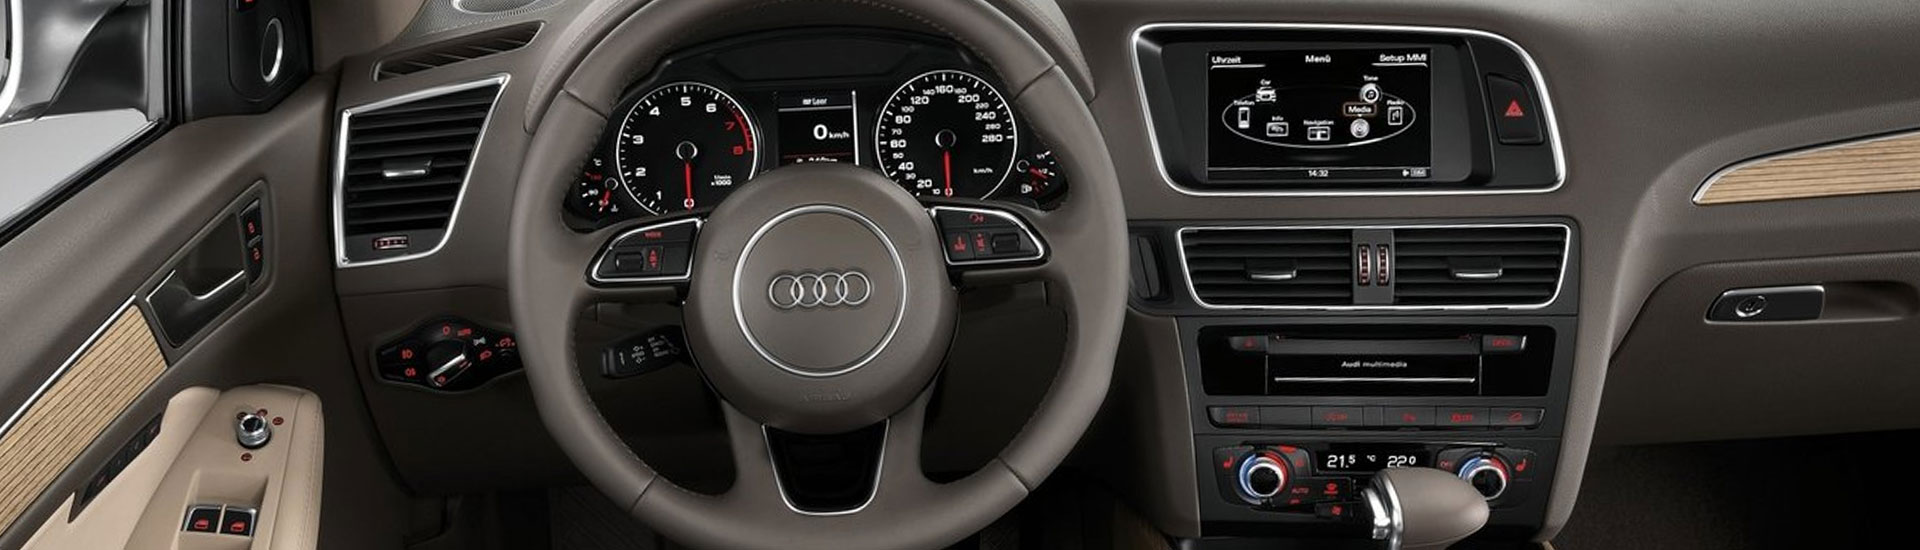 https://www.rvinyl.com/images/Audi-Q5-Dash-Kits.jpg